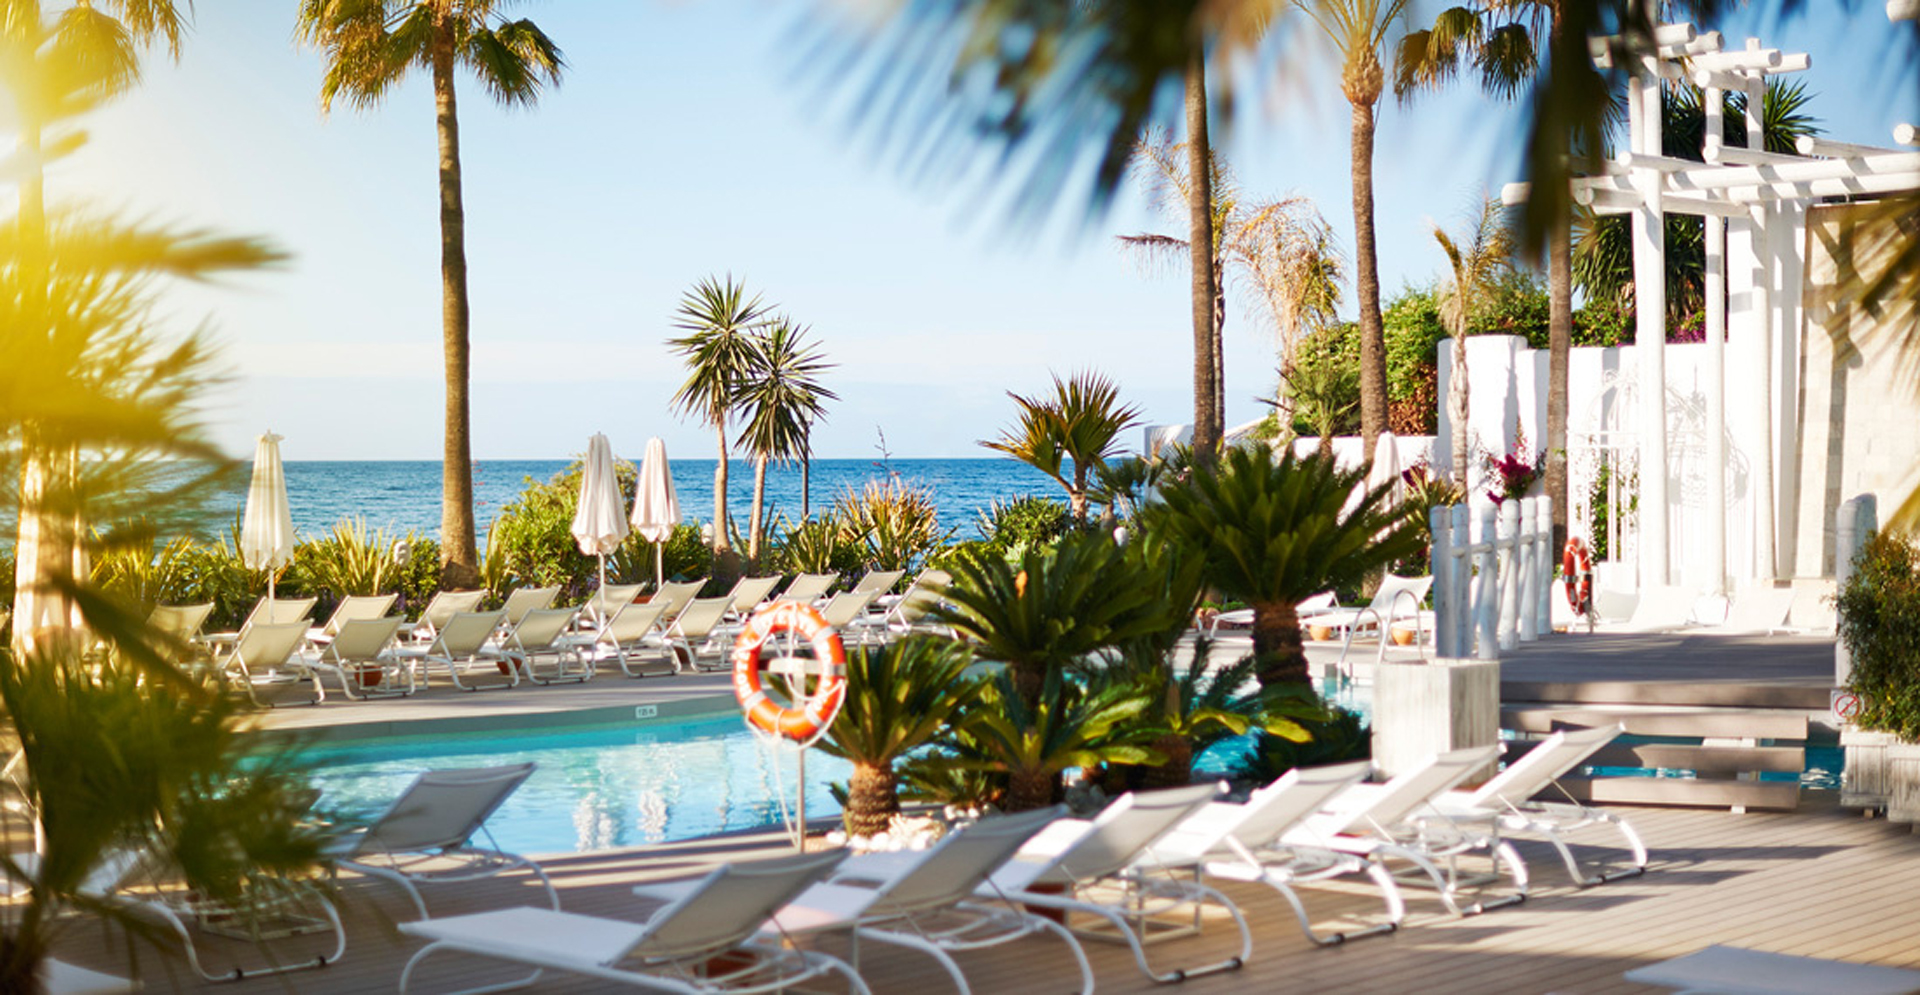 The Puente Romano Hotel – Marbella elegance personified